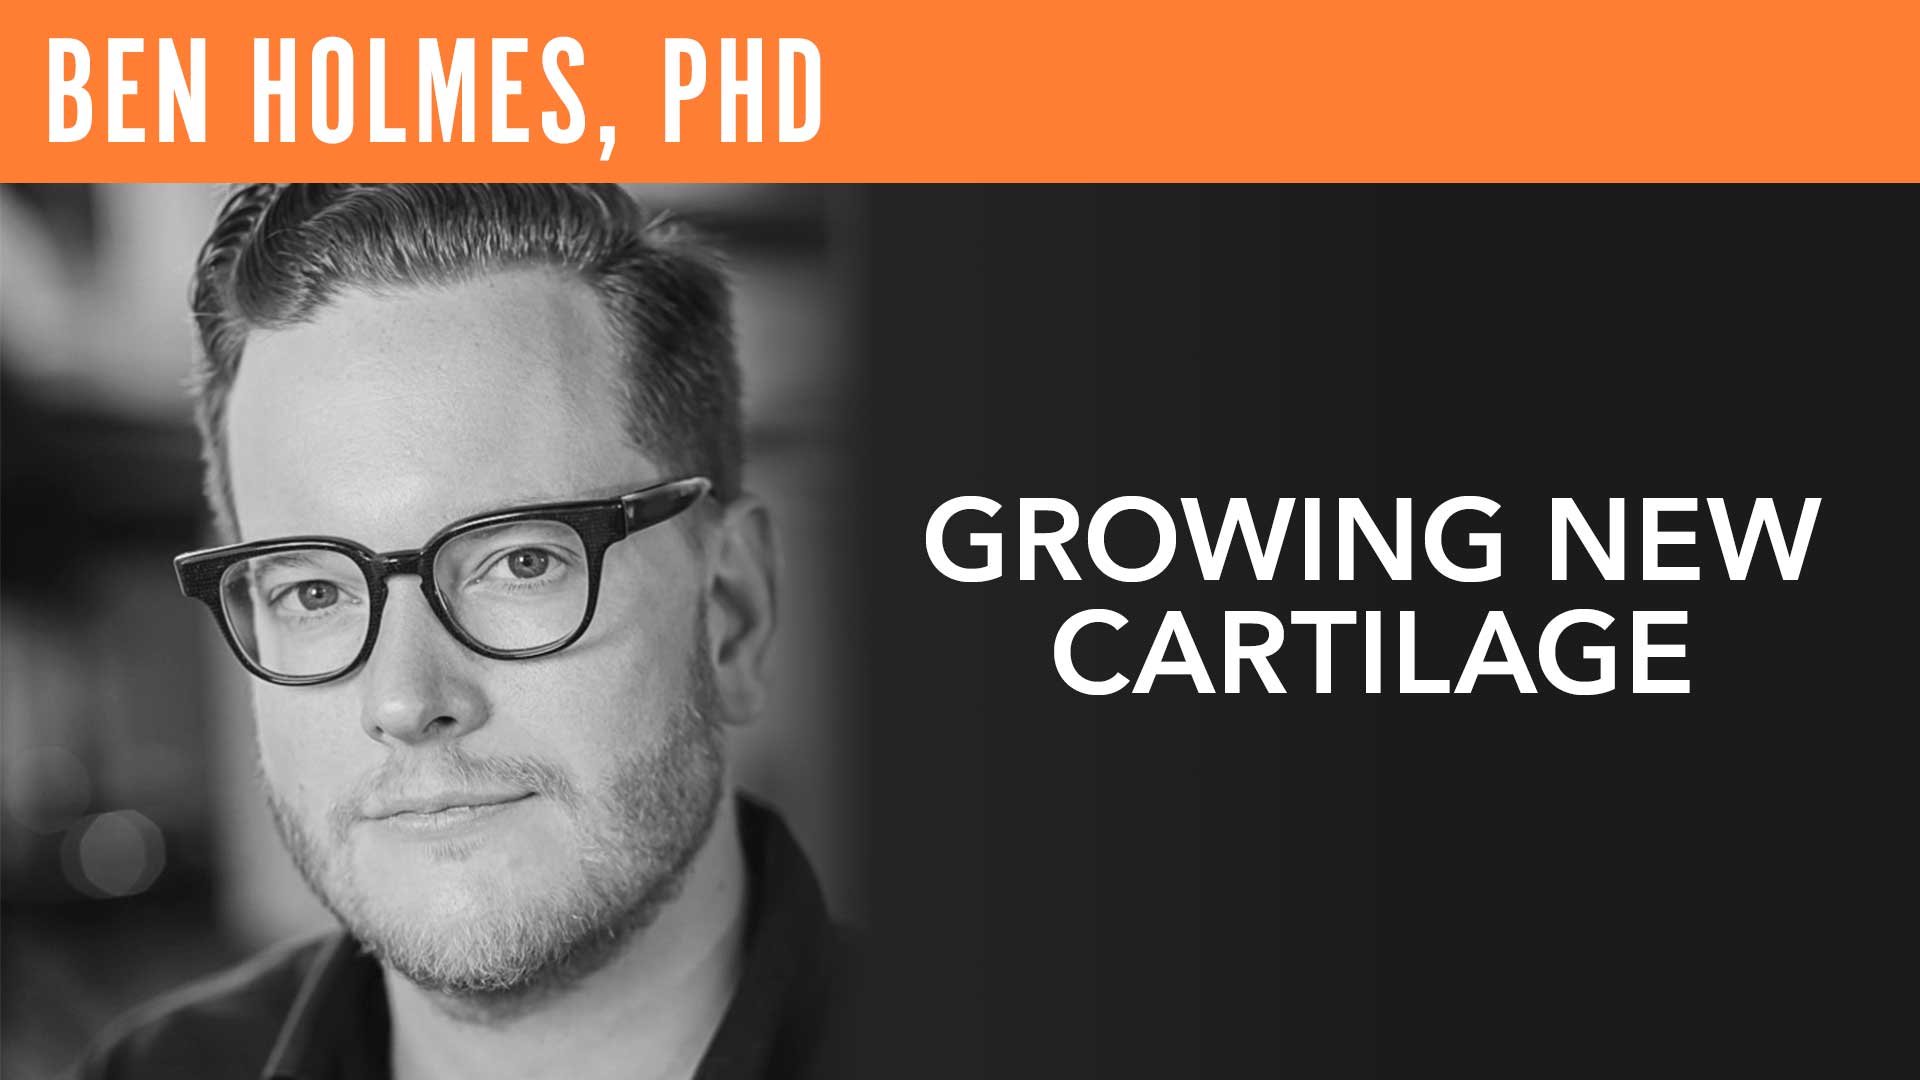 Ben Holmes, "Growing New Cartilage"